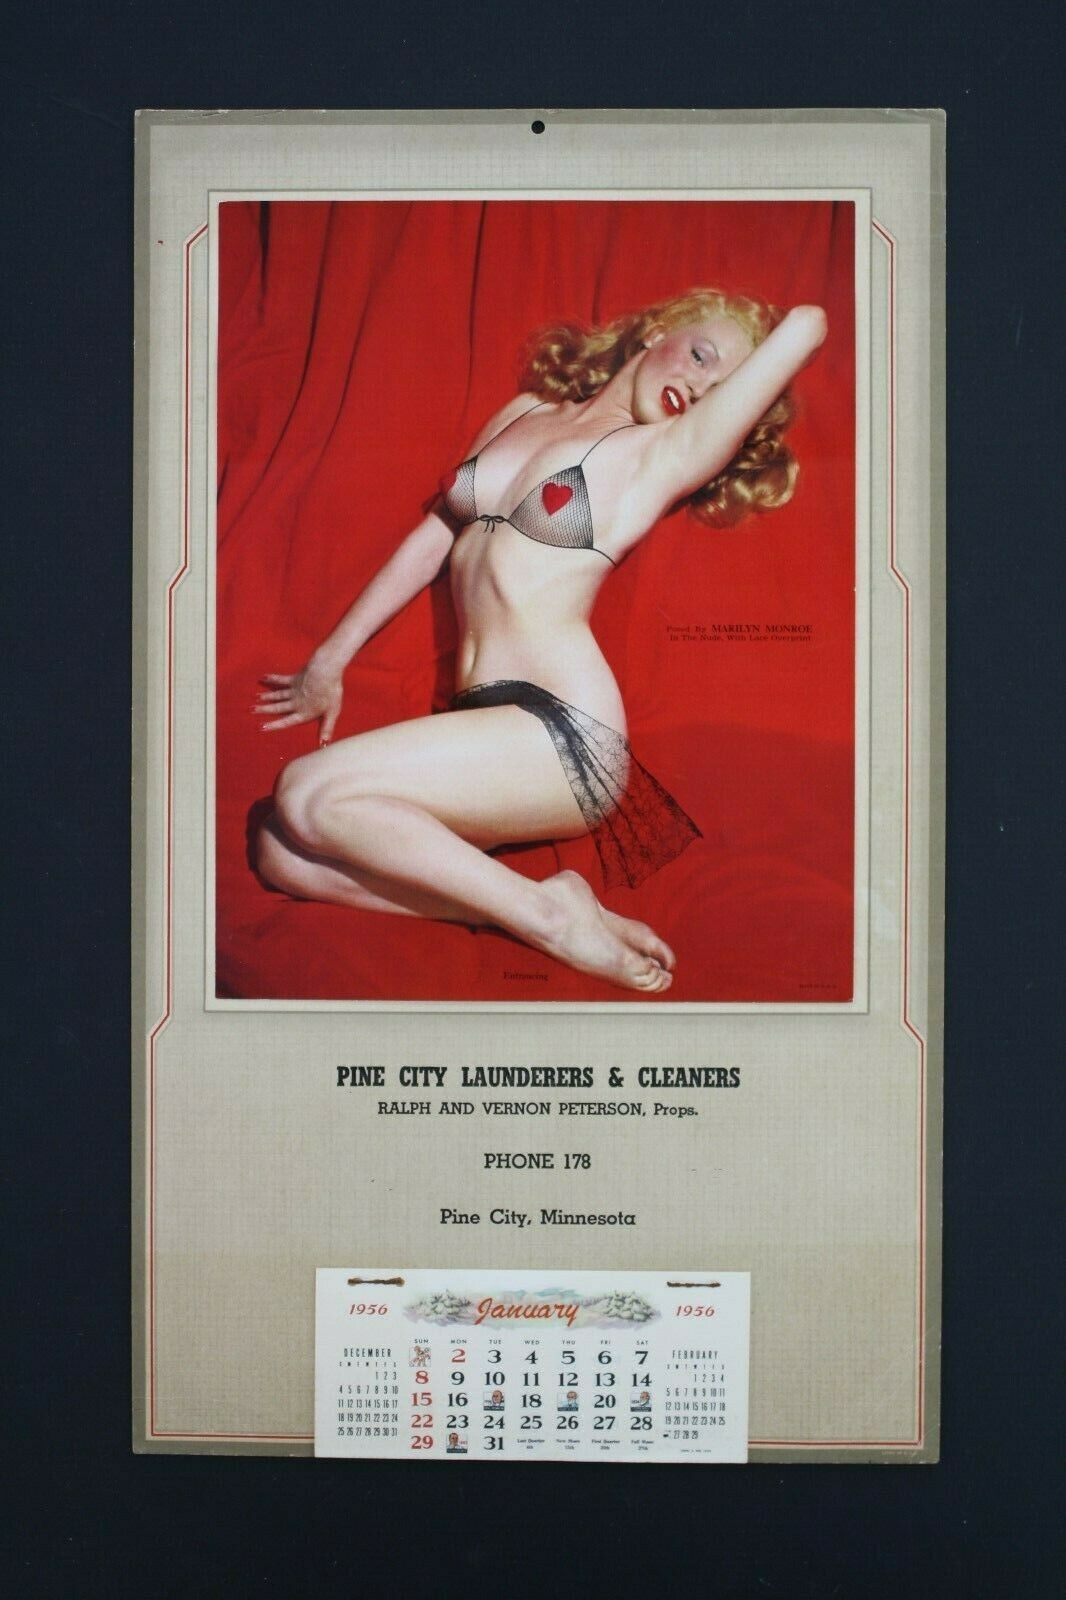 Original 1956 Marilyn Monroe Pinup Advertising Calendar - Pine City, Minn. Store